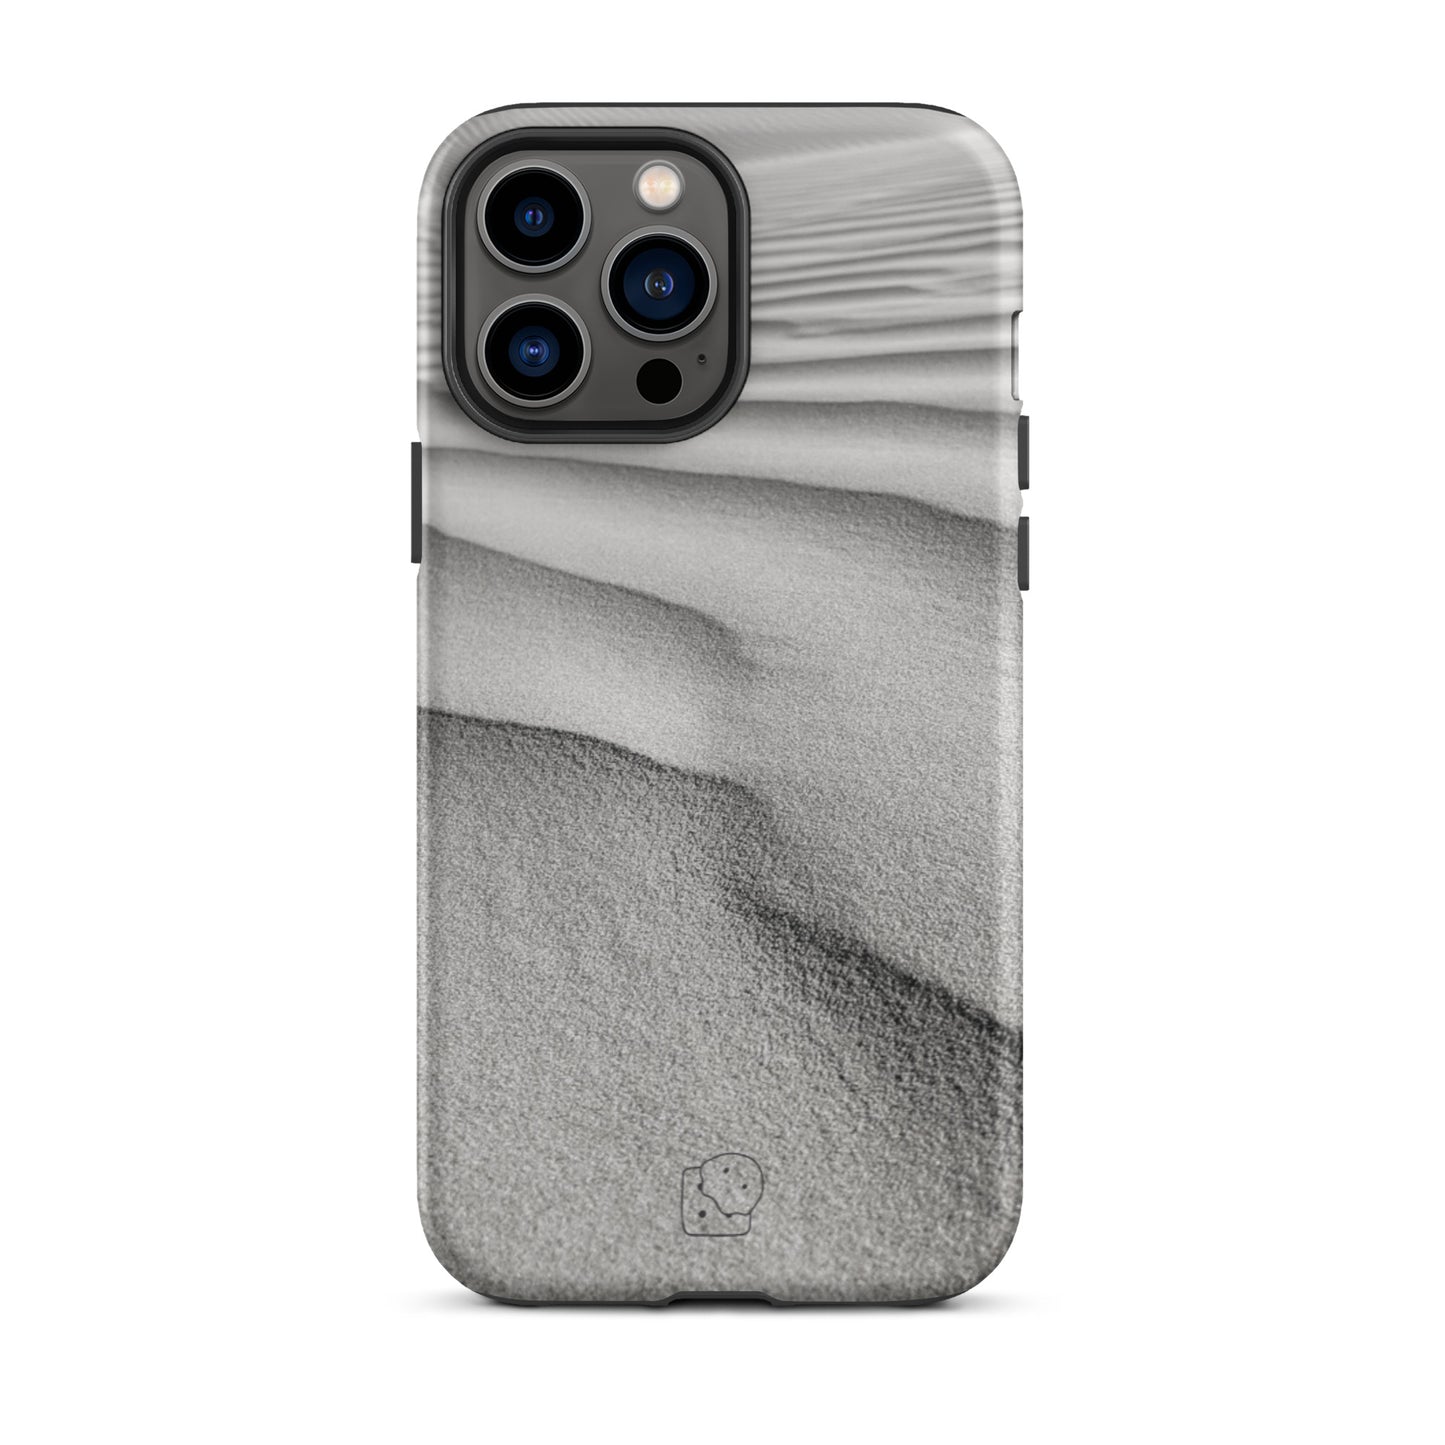 Davis' Grains of Sand Tough iPhone Case